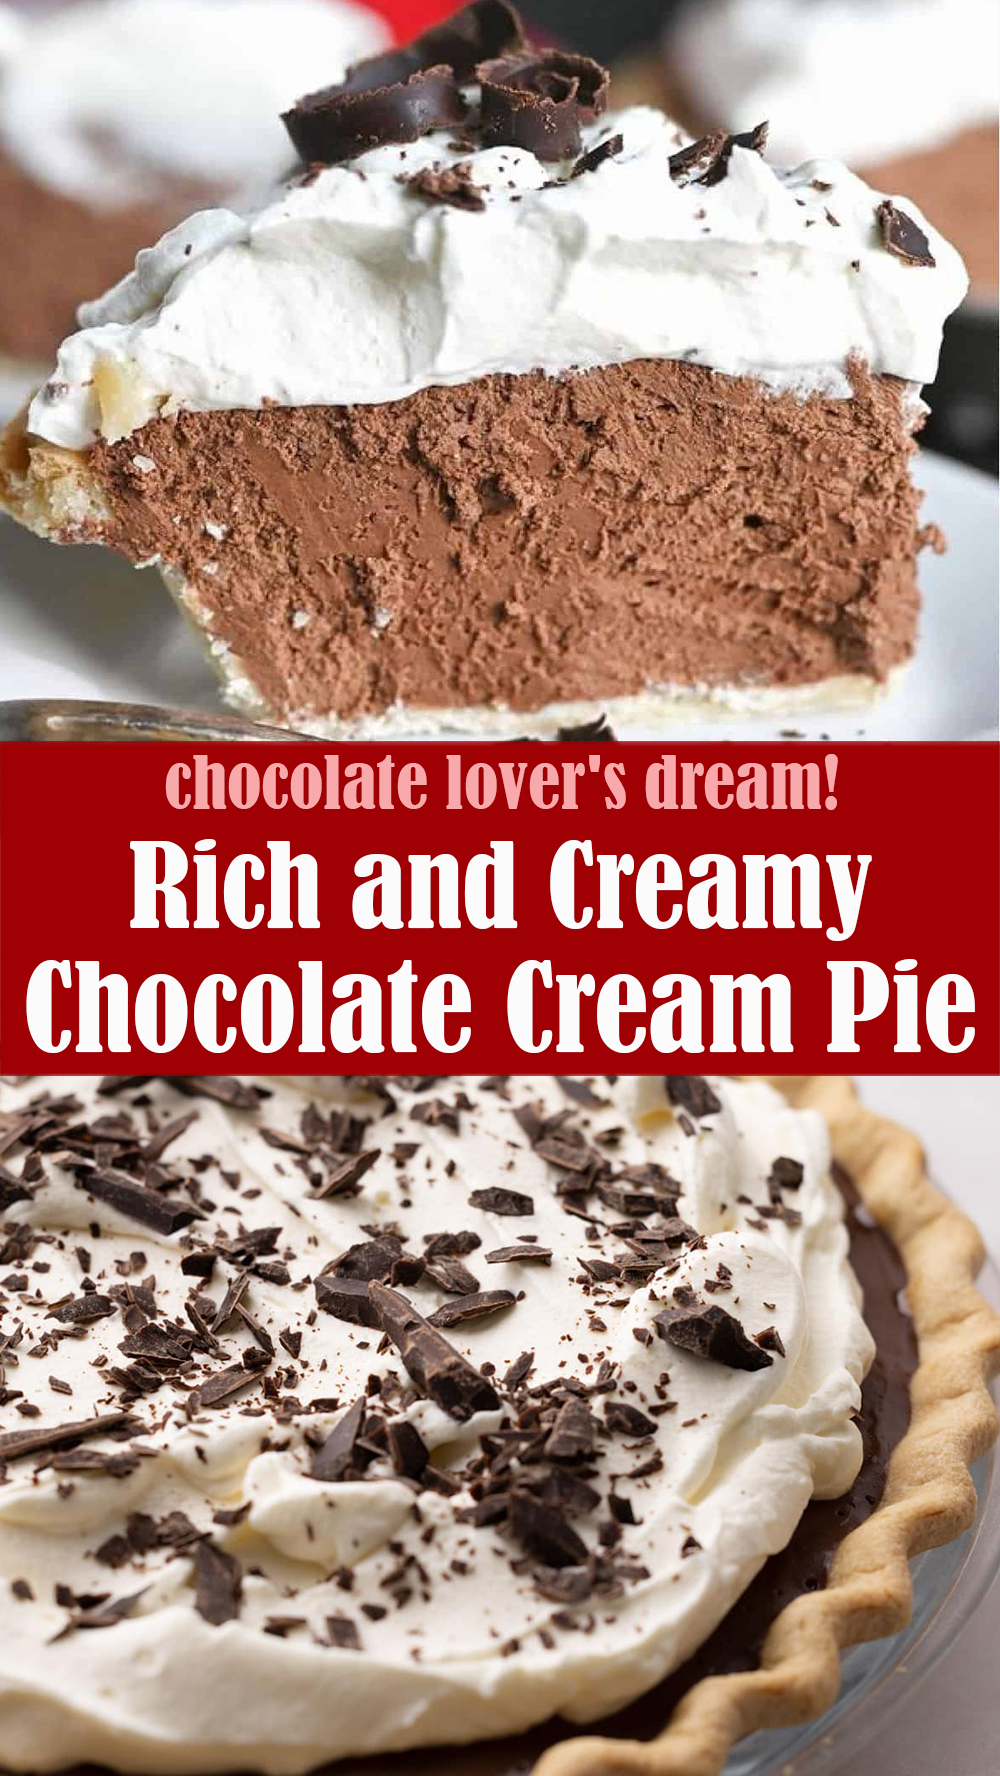 Rich and Creamy Chocolate Cream Pie